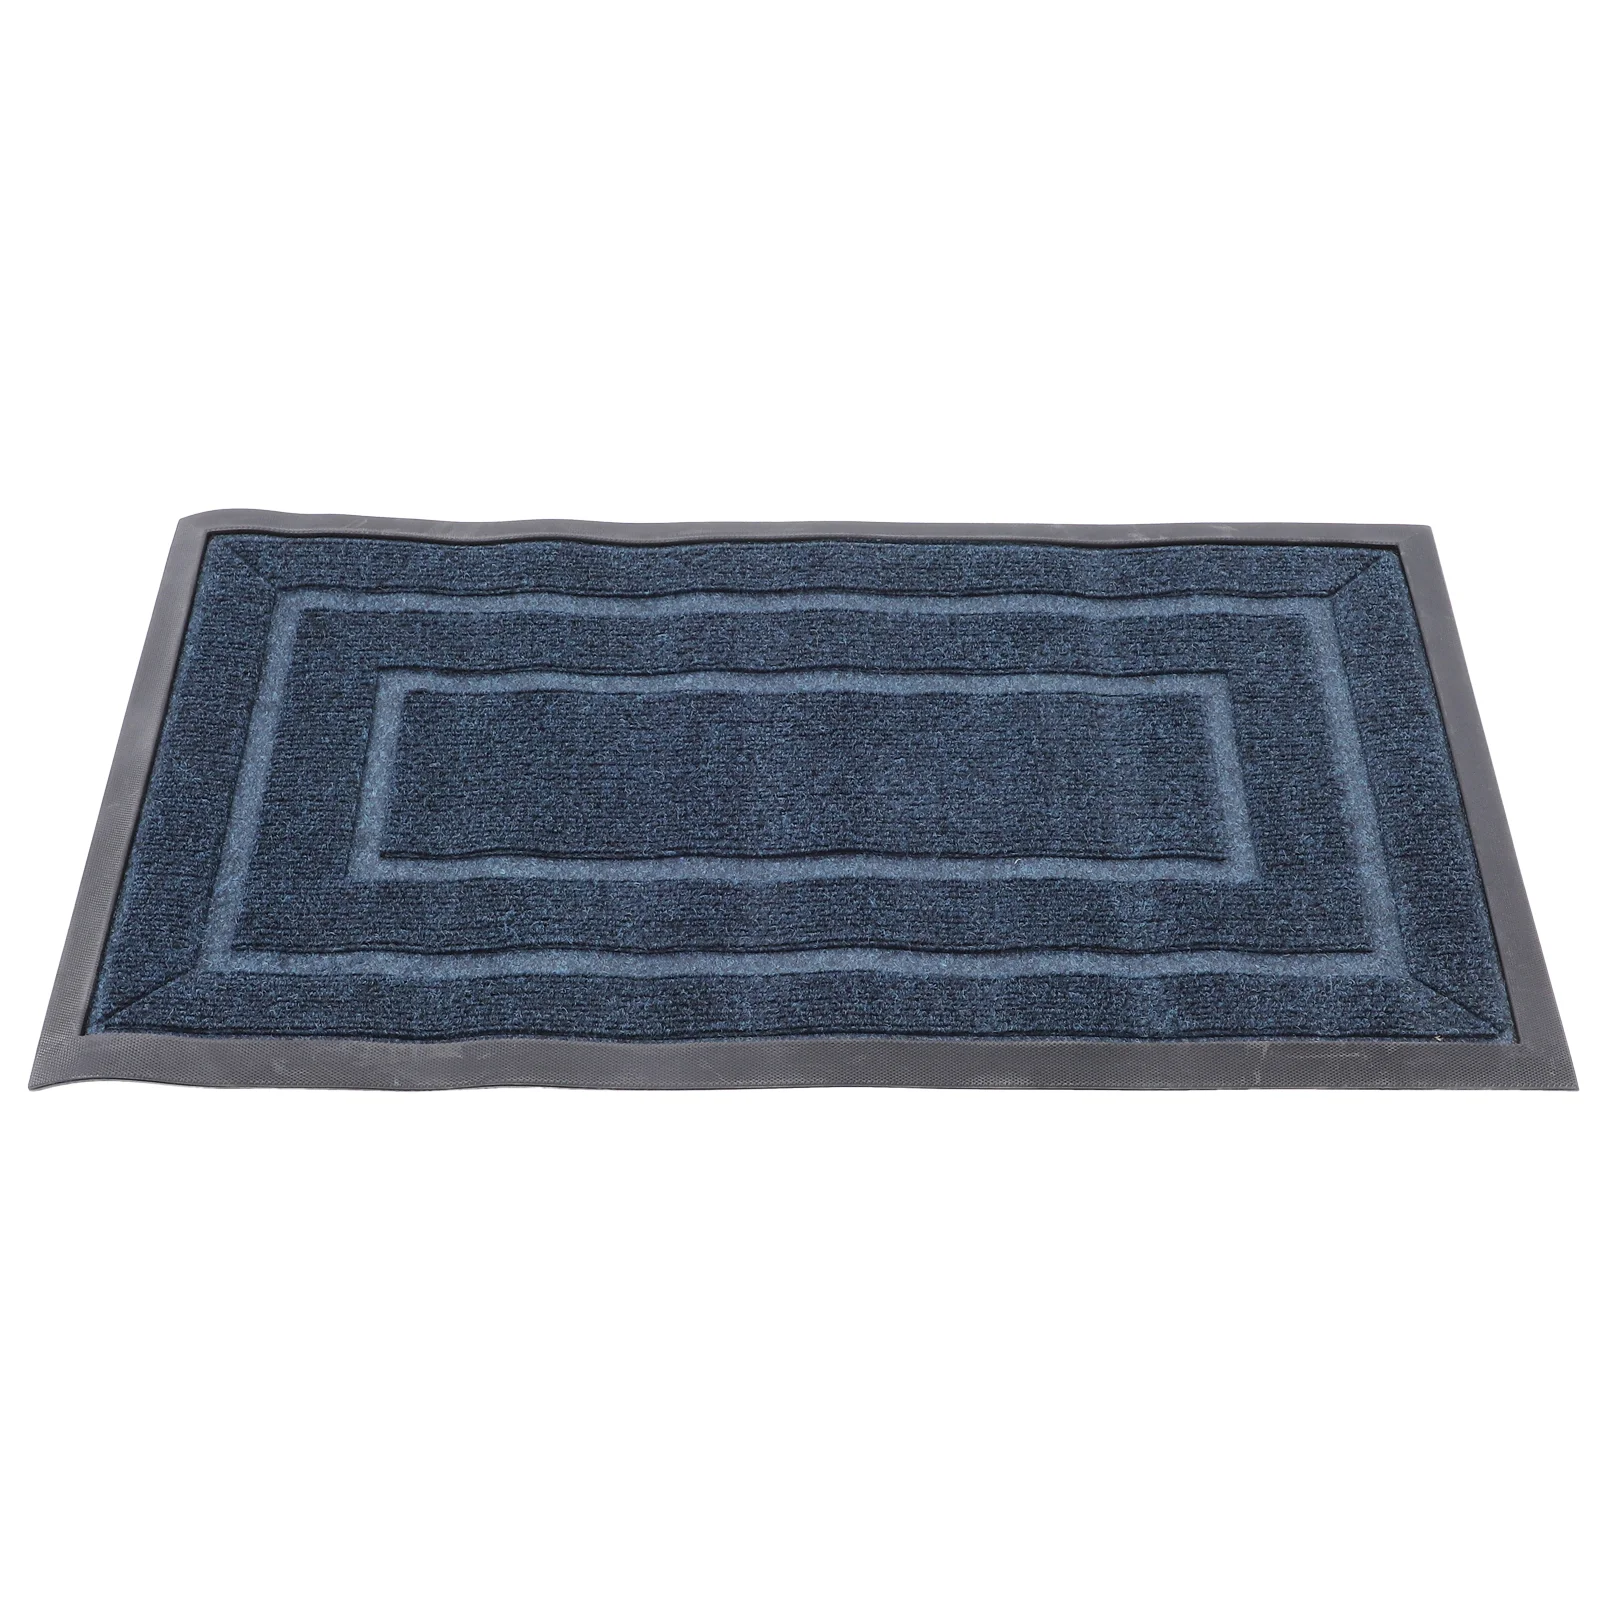 

Door Mat Anti-skid Bathroom Floor Mats Home Supplies Cushion Rubber Water-absorbing Pad Area Rugs